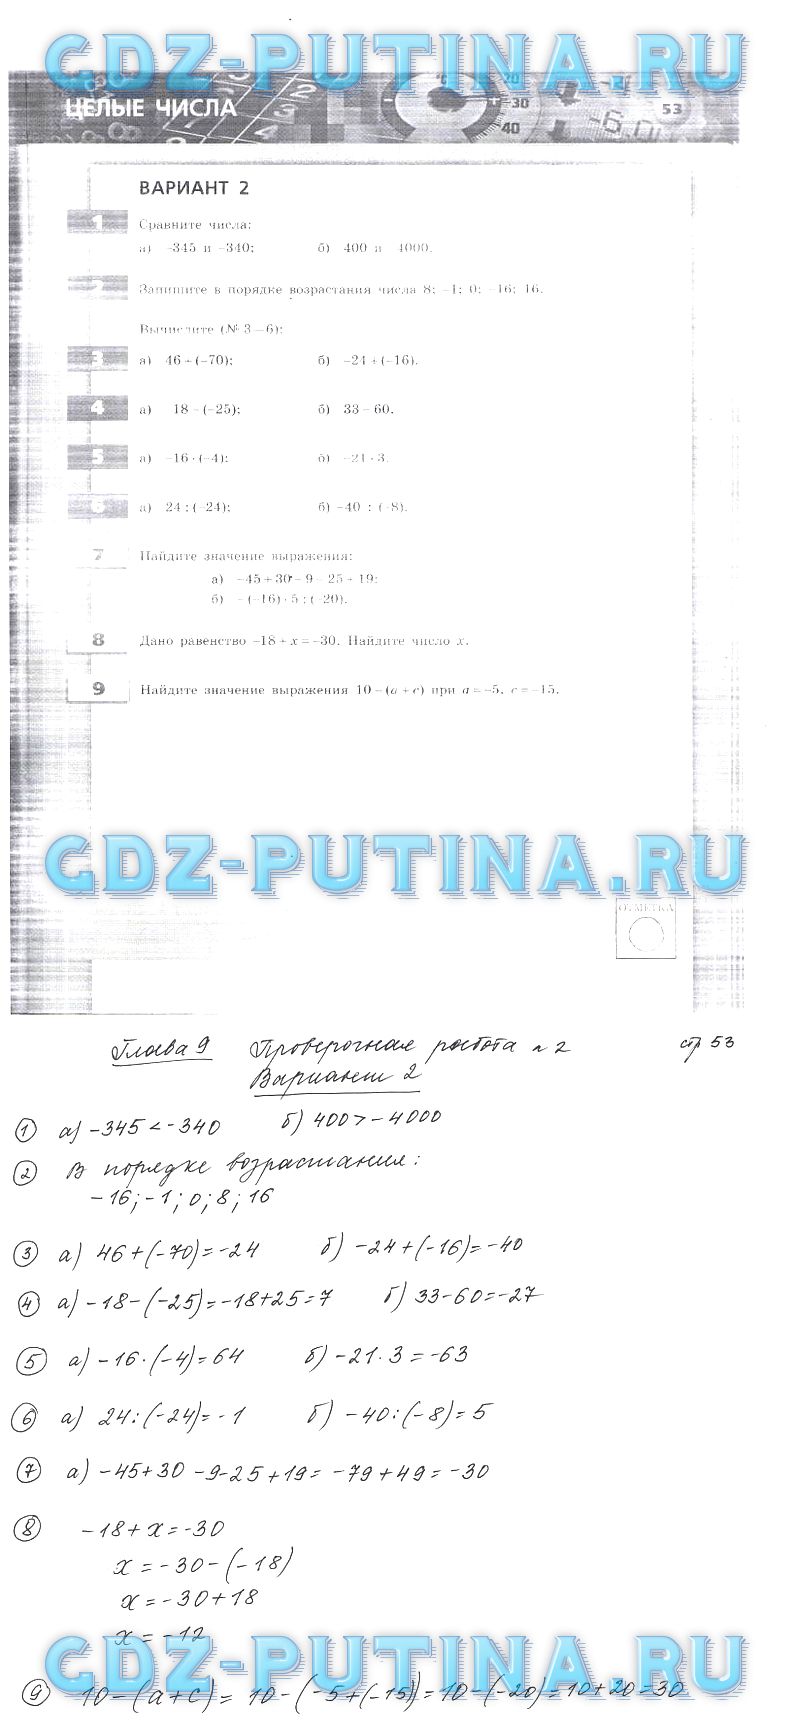 гдз 6 класс тетрадь-экзаменатор страница 53 математика Кузнецова